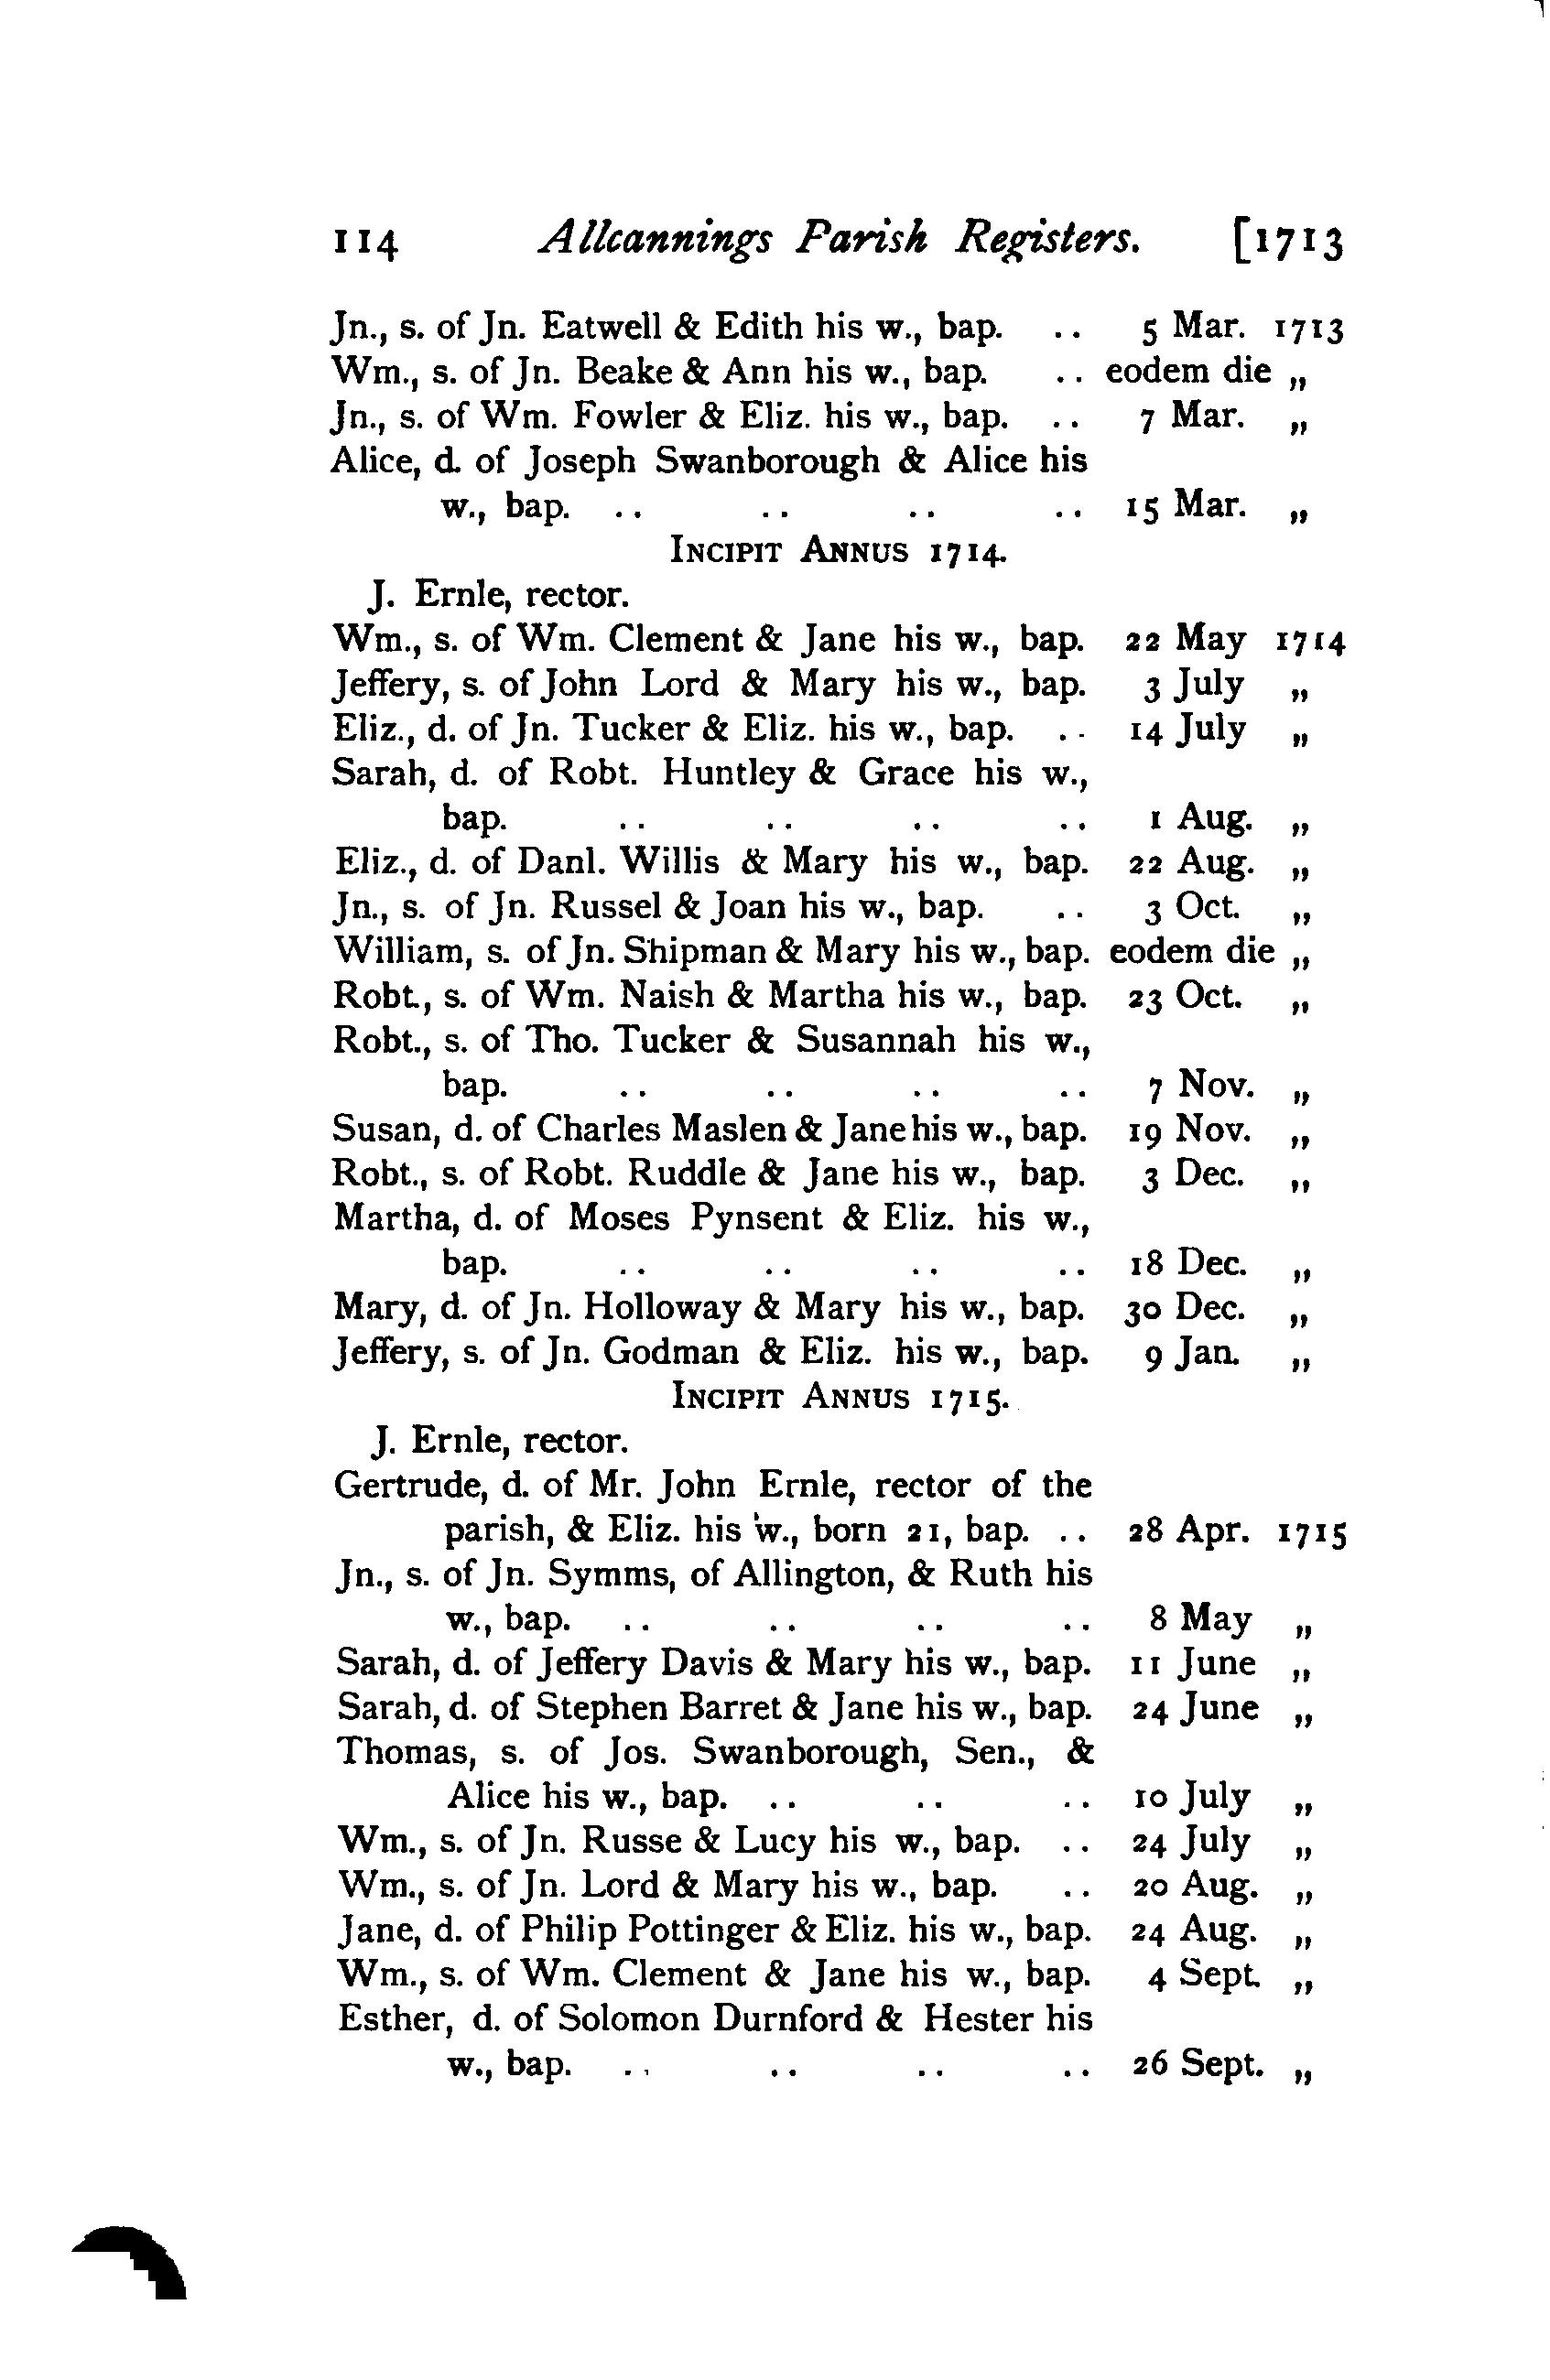 1713 baptism, Alice Swanborough